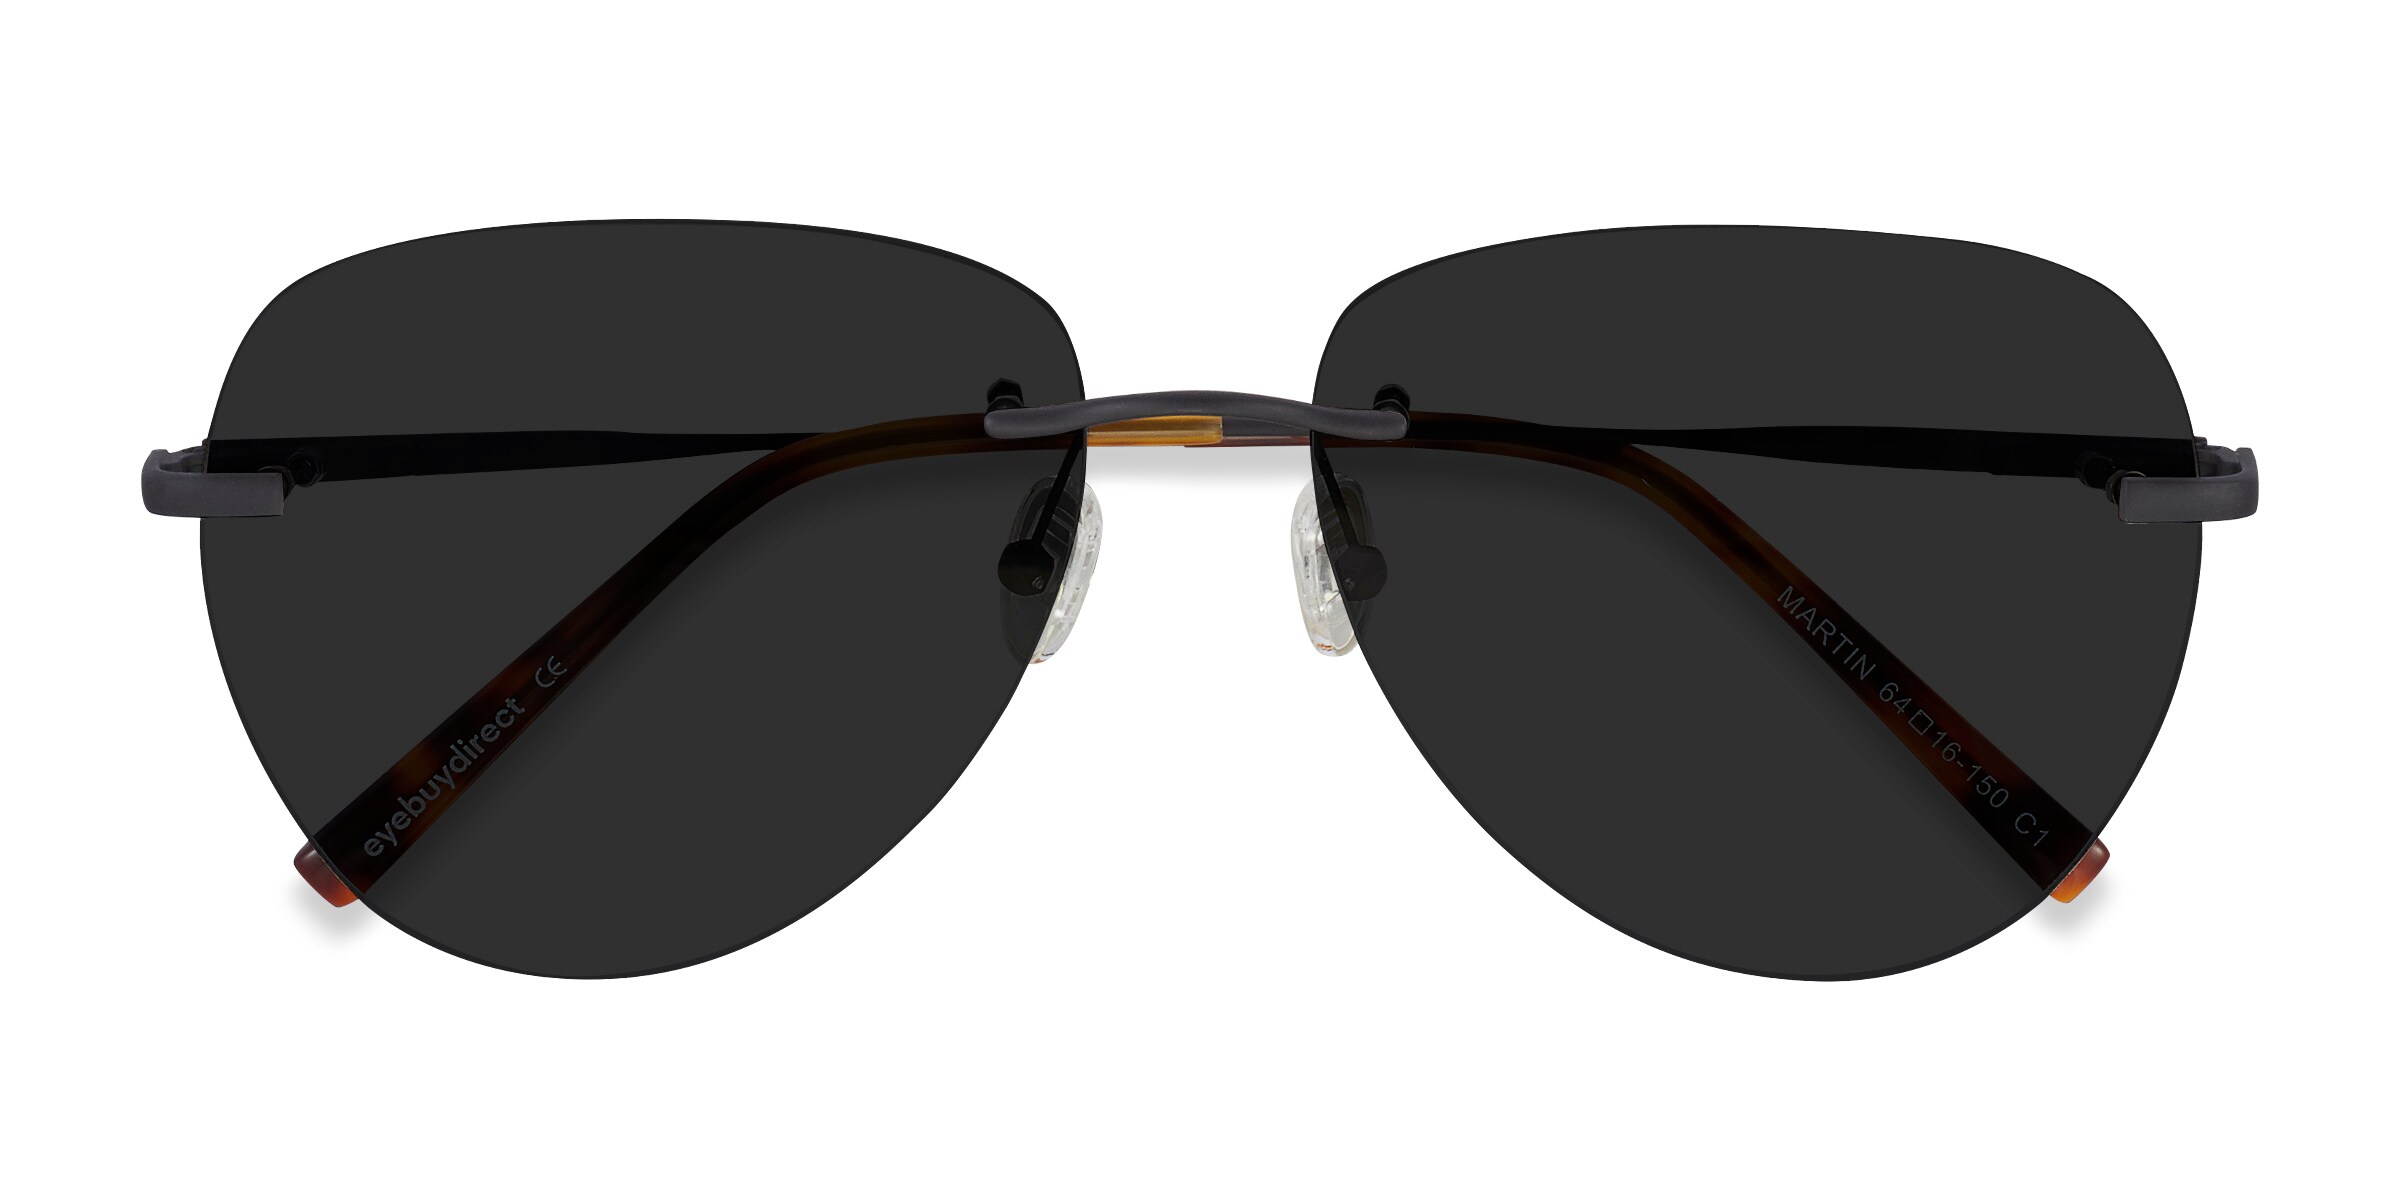 Square Aviators - Running Sunglasses - Sports Sunglasses | ROKA